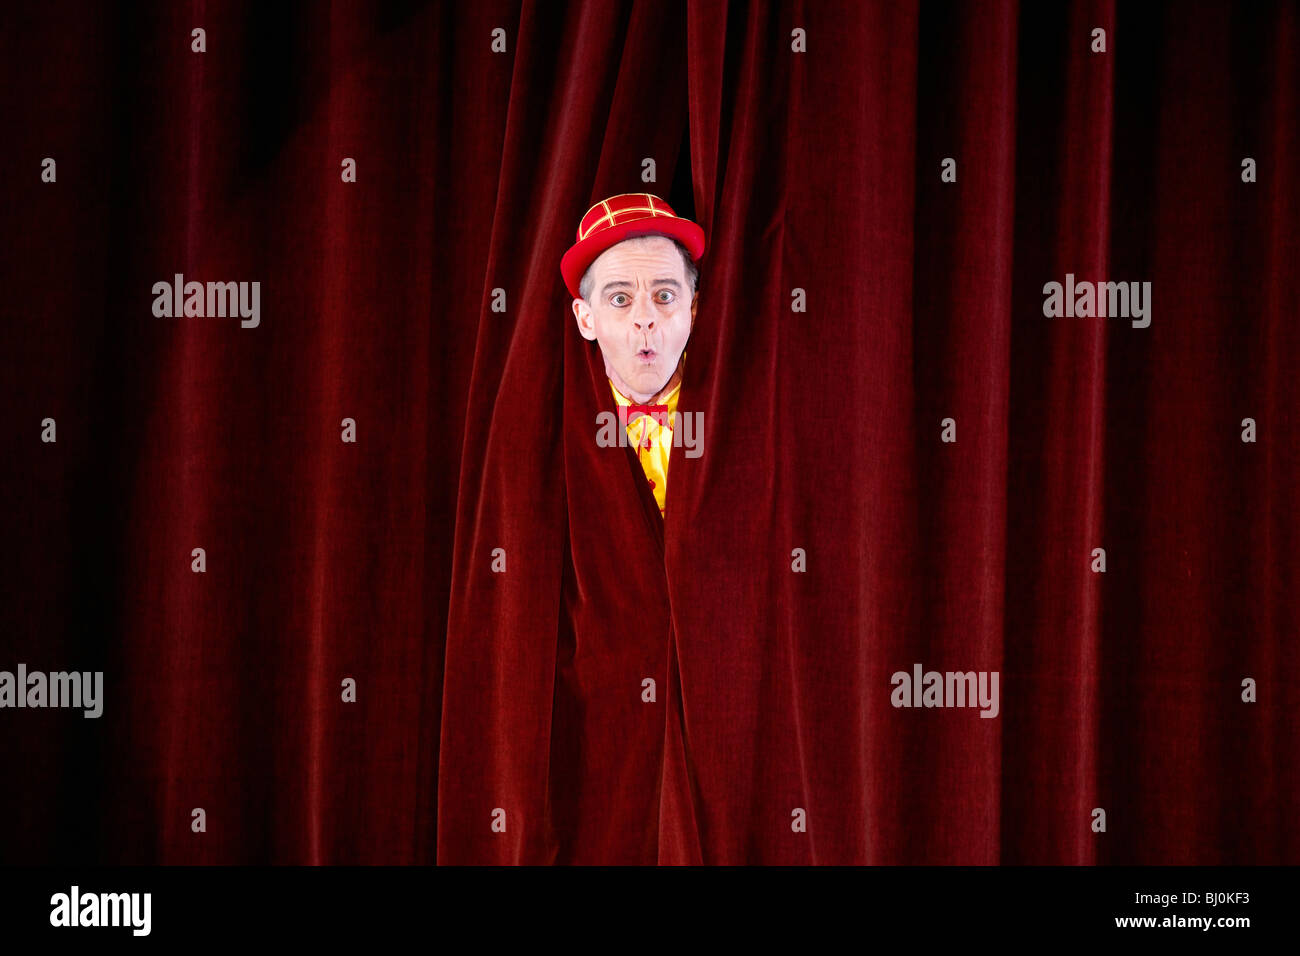 clown on stage peeking through curtain Stock Photo